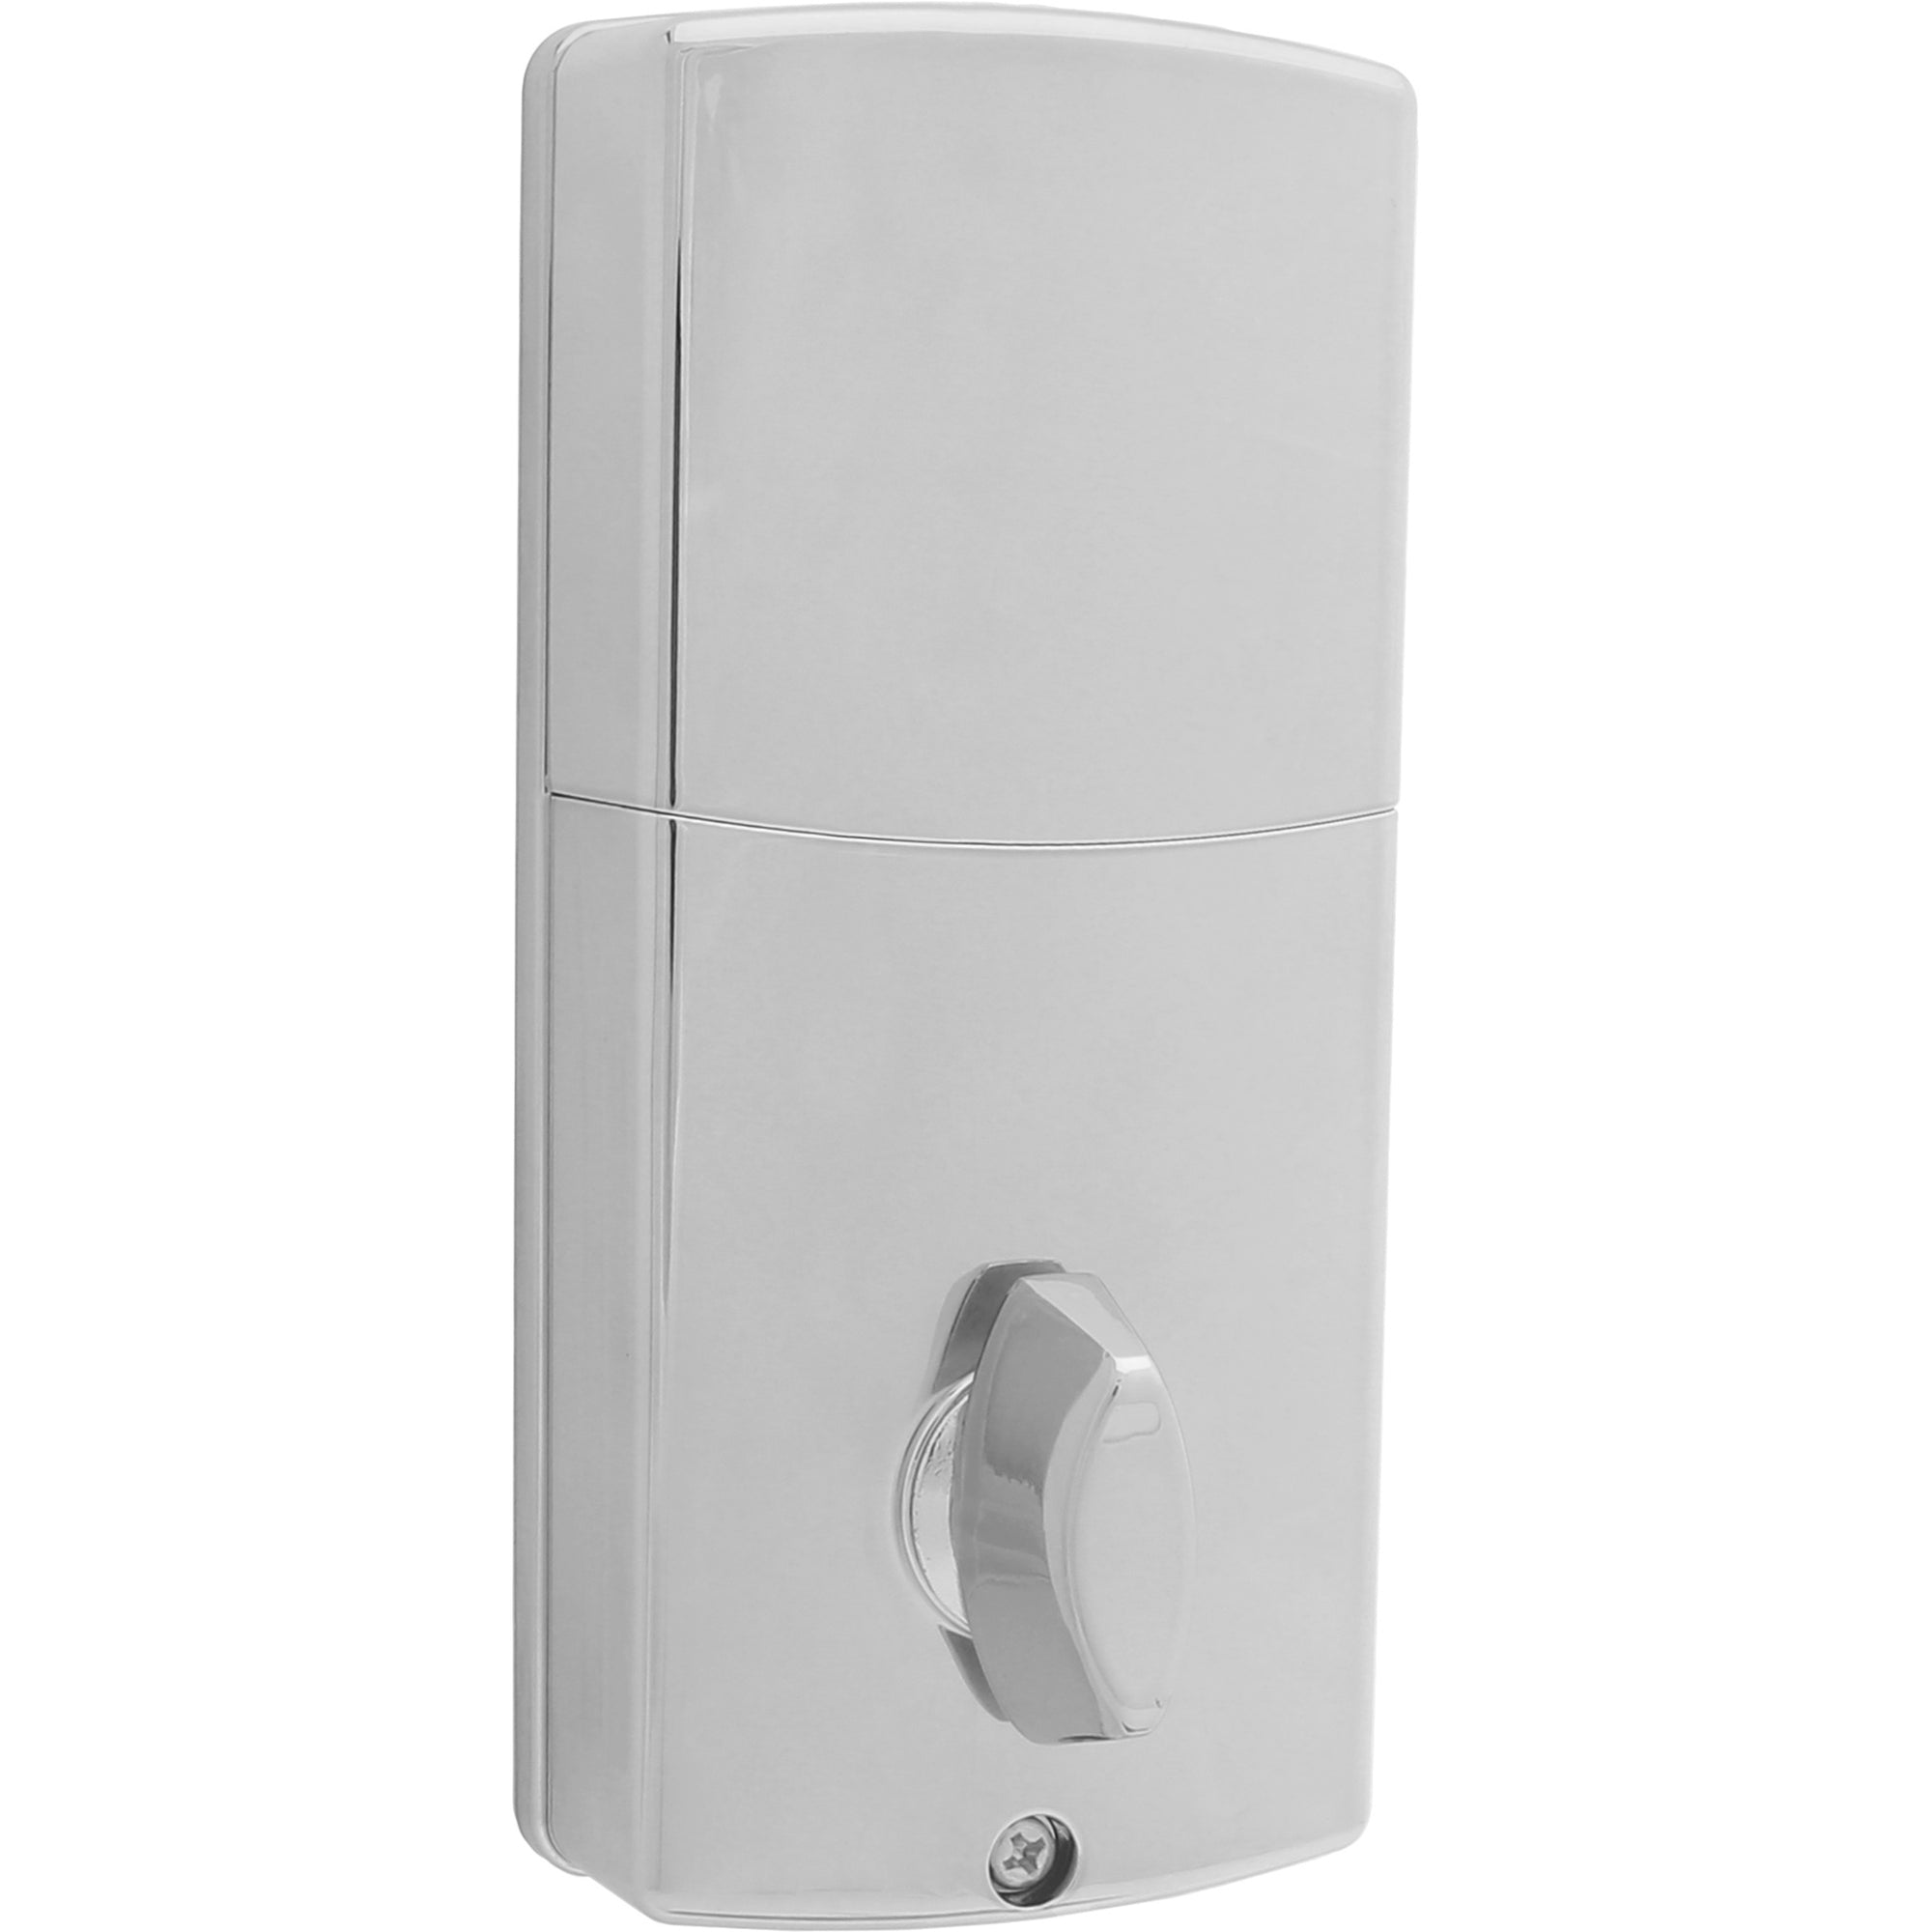 Honeywell 8712309L Electronic Deadbolt Door Lock with Keypad in Satin Nickel